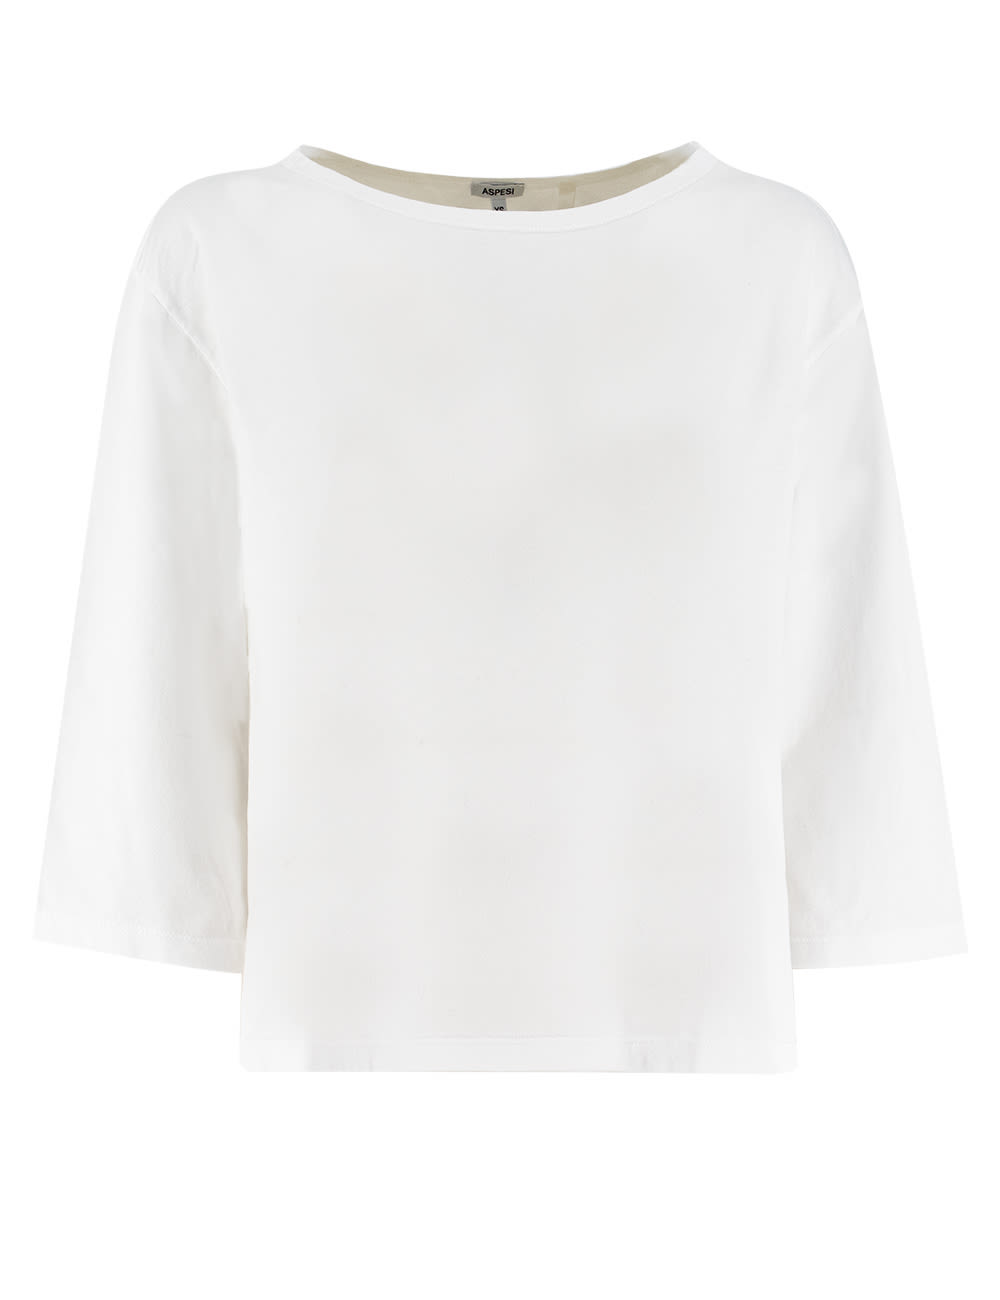 Aspesi Sweater In Bianco/white